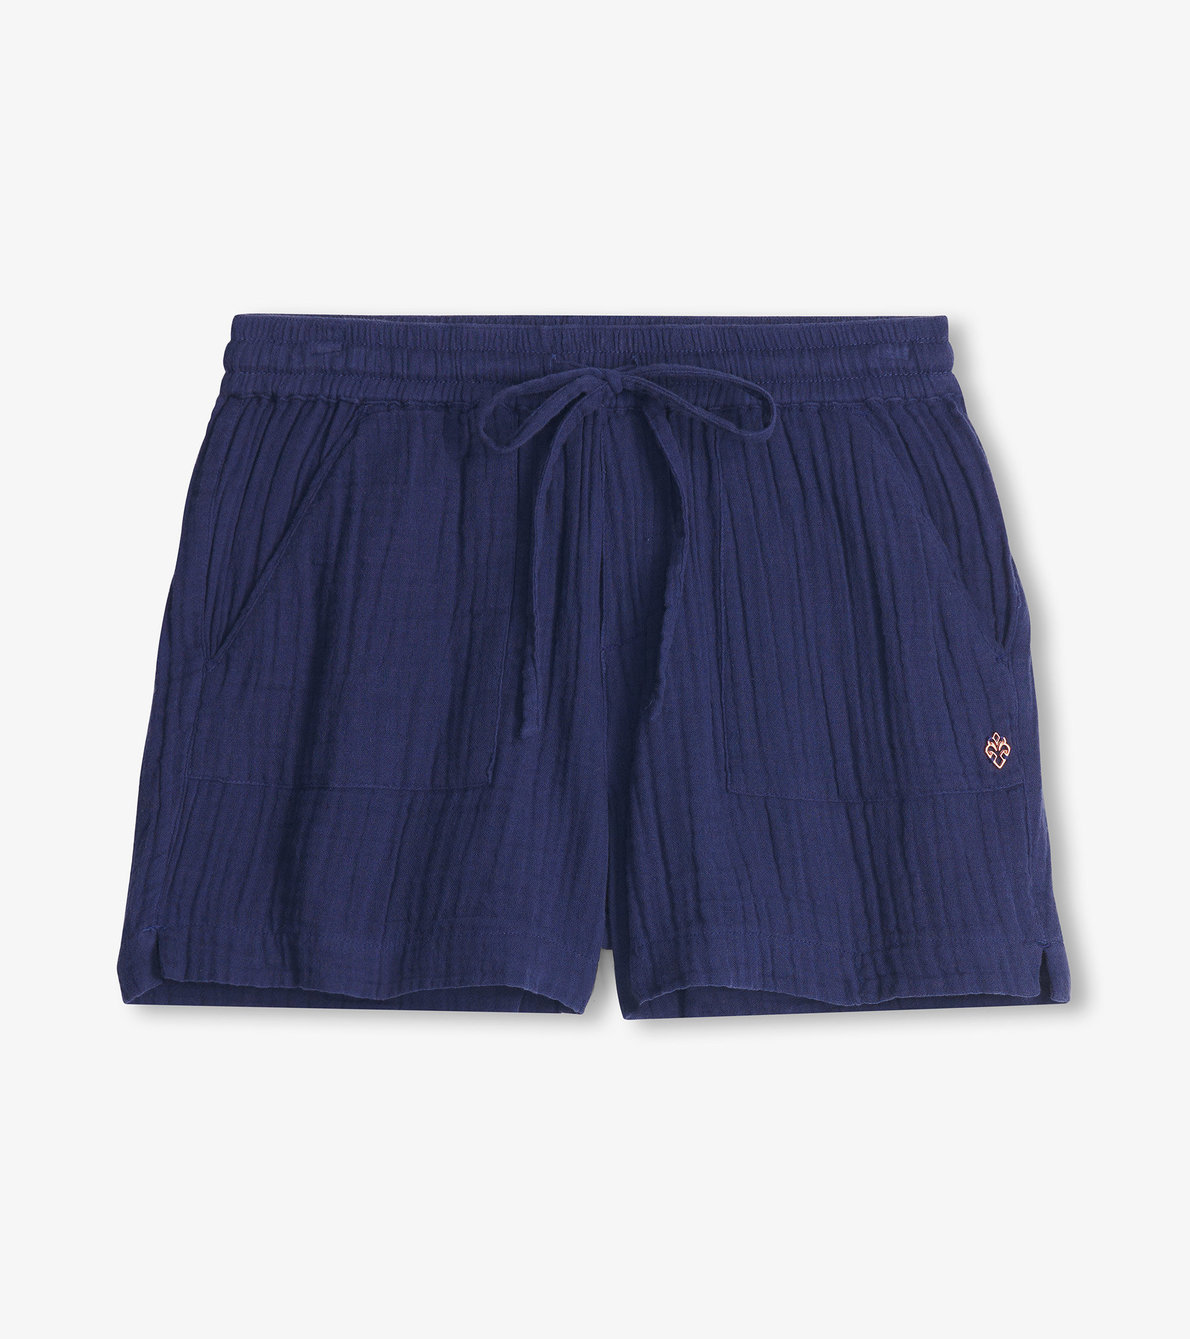 View larger image of Santorini Shorts - Navy Gauze